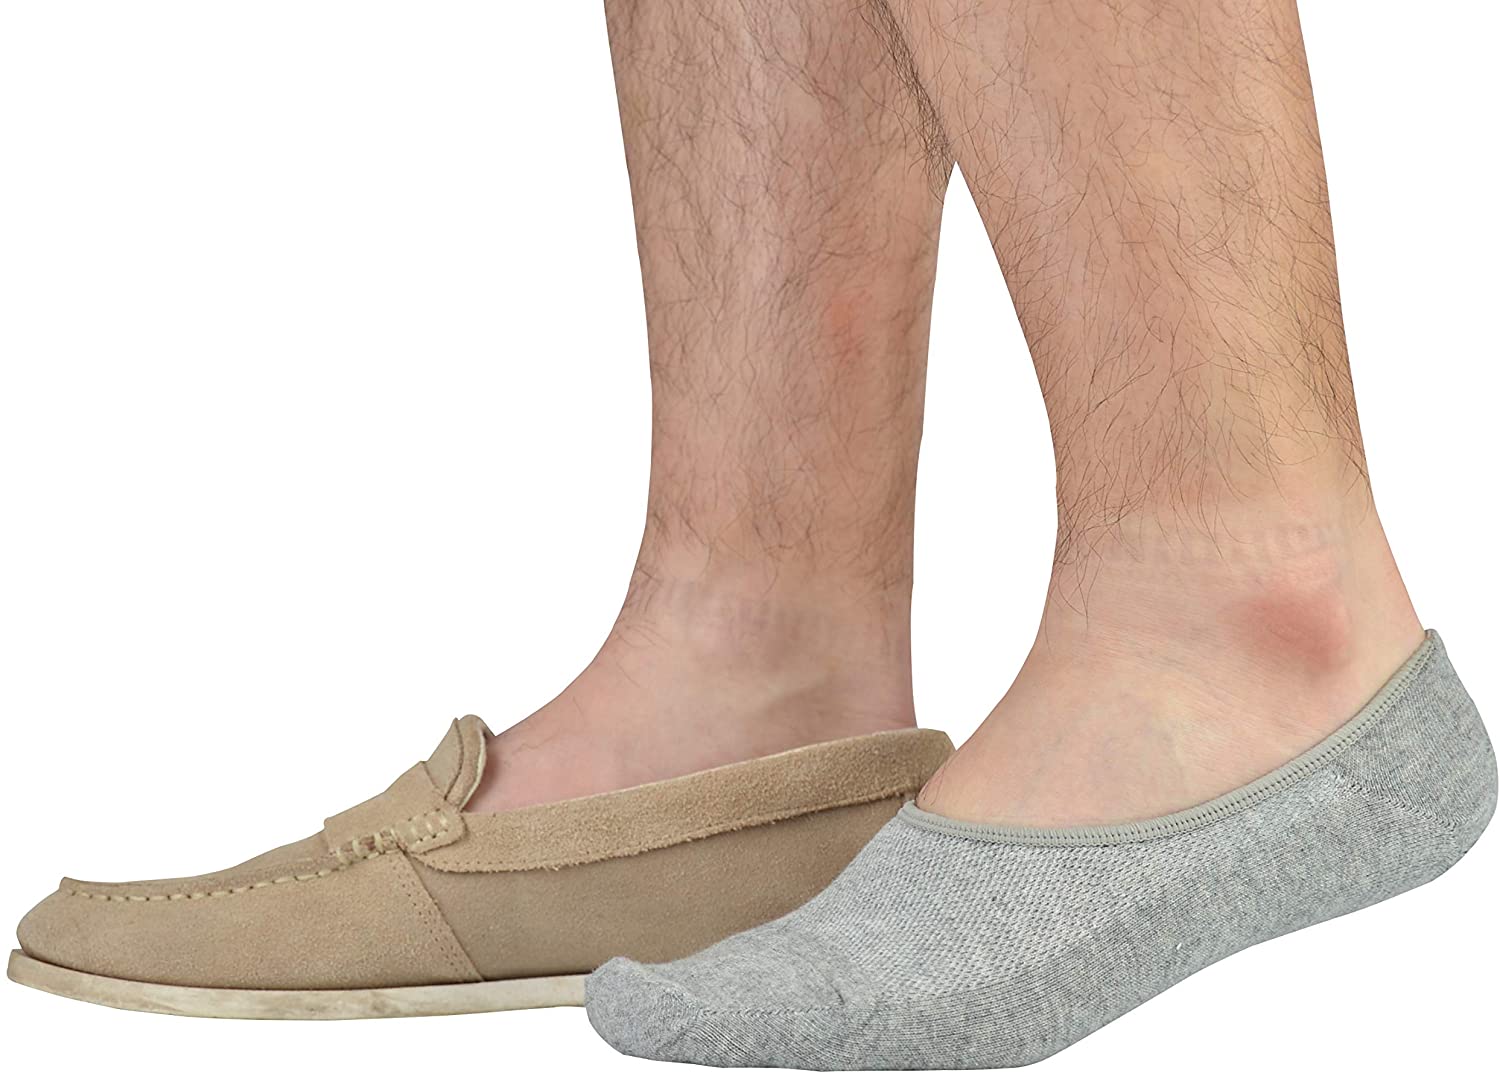 Jormatt Genuine Mens No Show Socks Loafer Sneakers Low Cut Cotton Socks With Non Slip Grips 